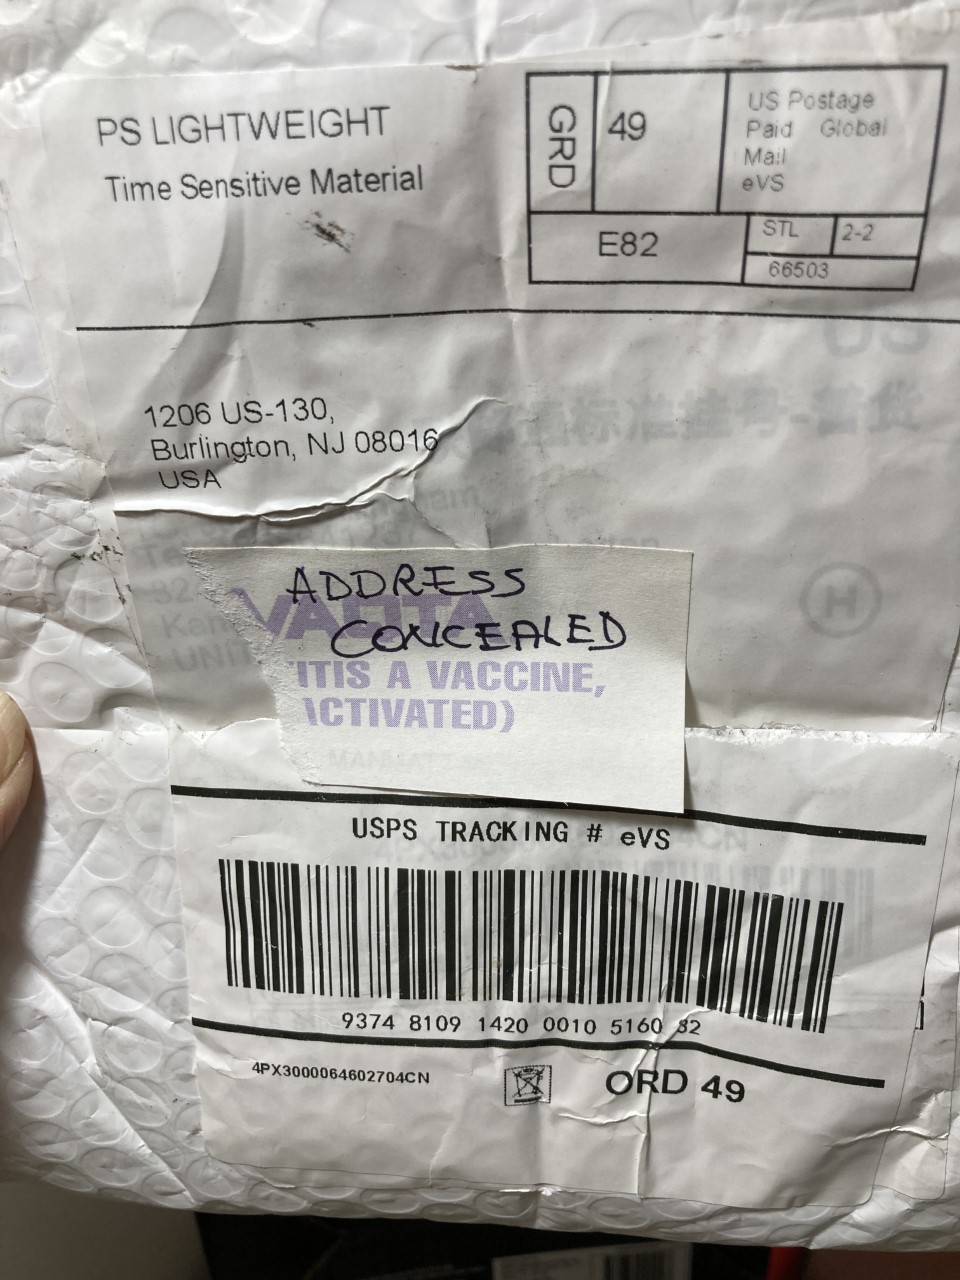 shipping label from 1206 US-130, Burlington, NJ 08